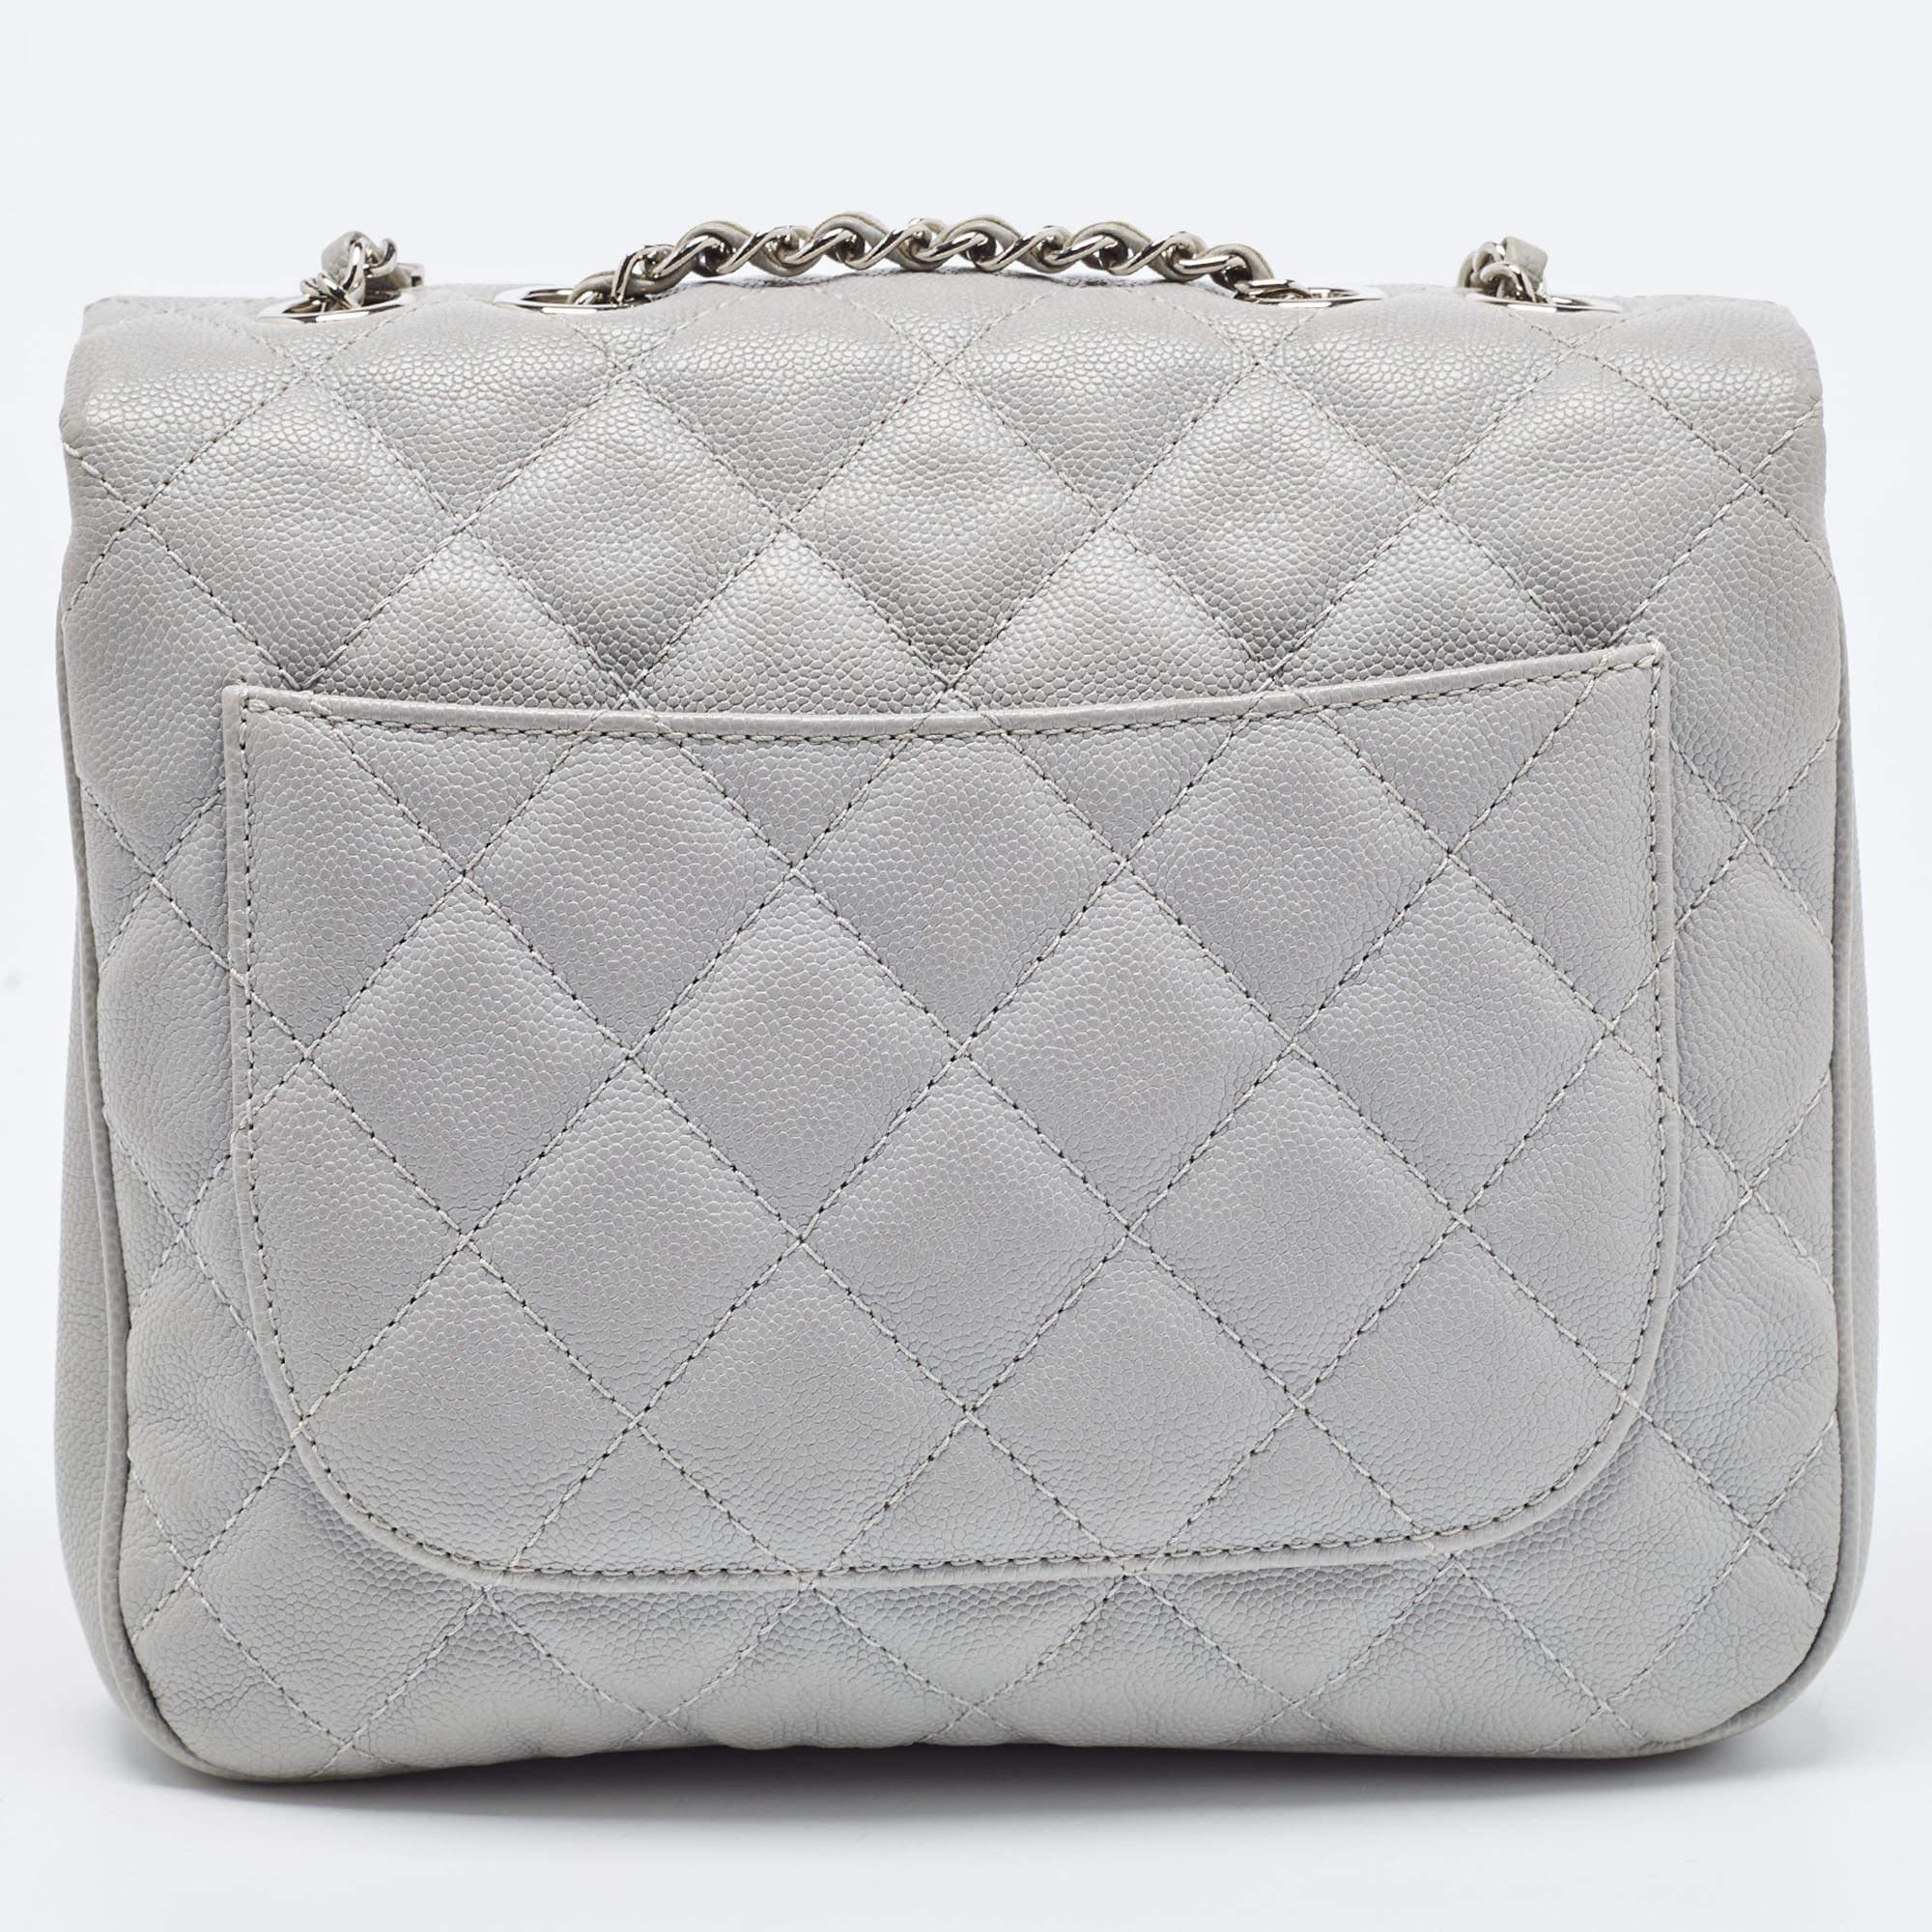 Chanel Grey Caviar Leather Medium Urban Companion Flap Bag For Sale 3